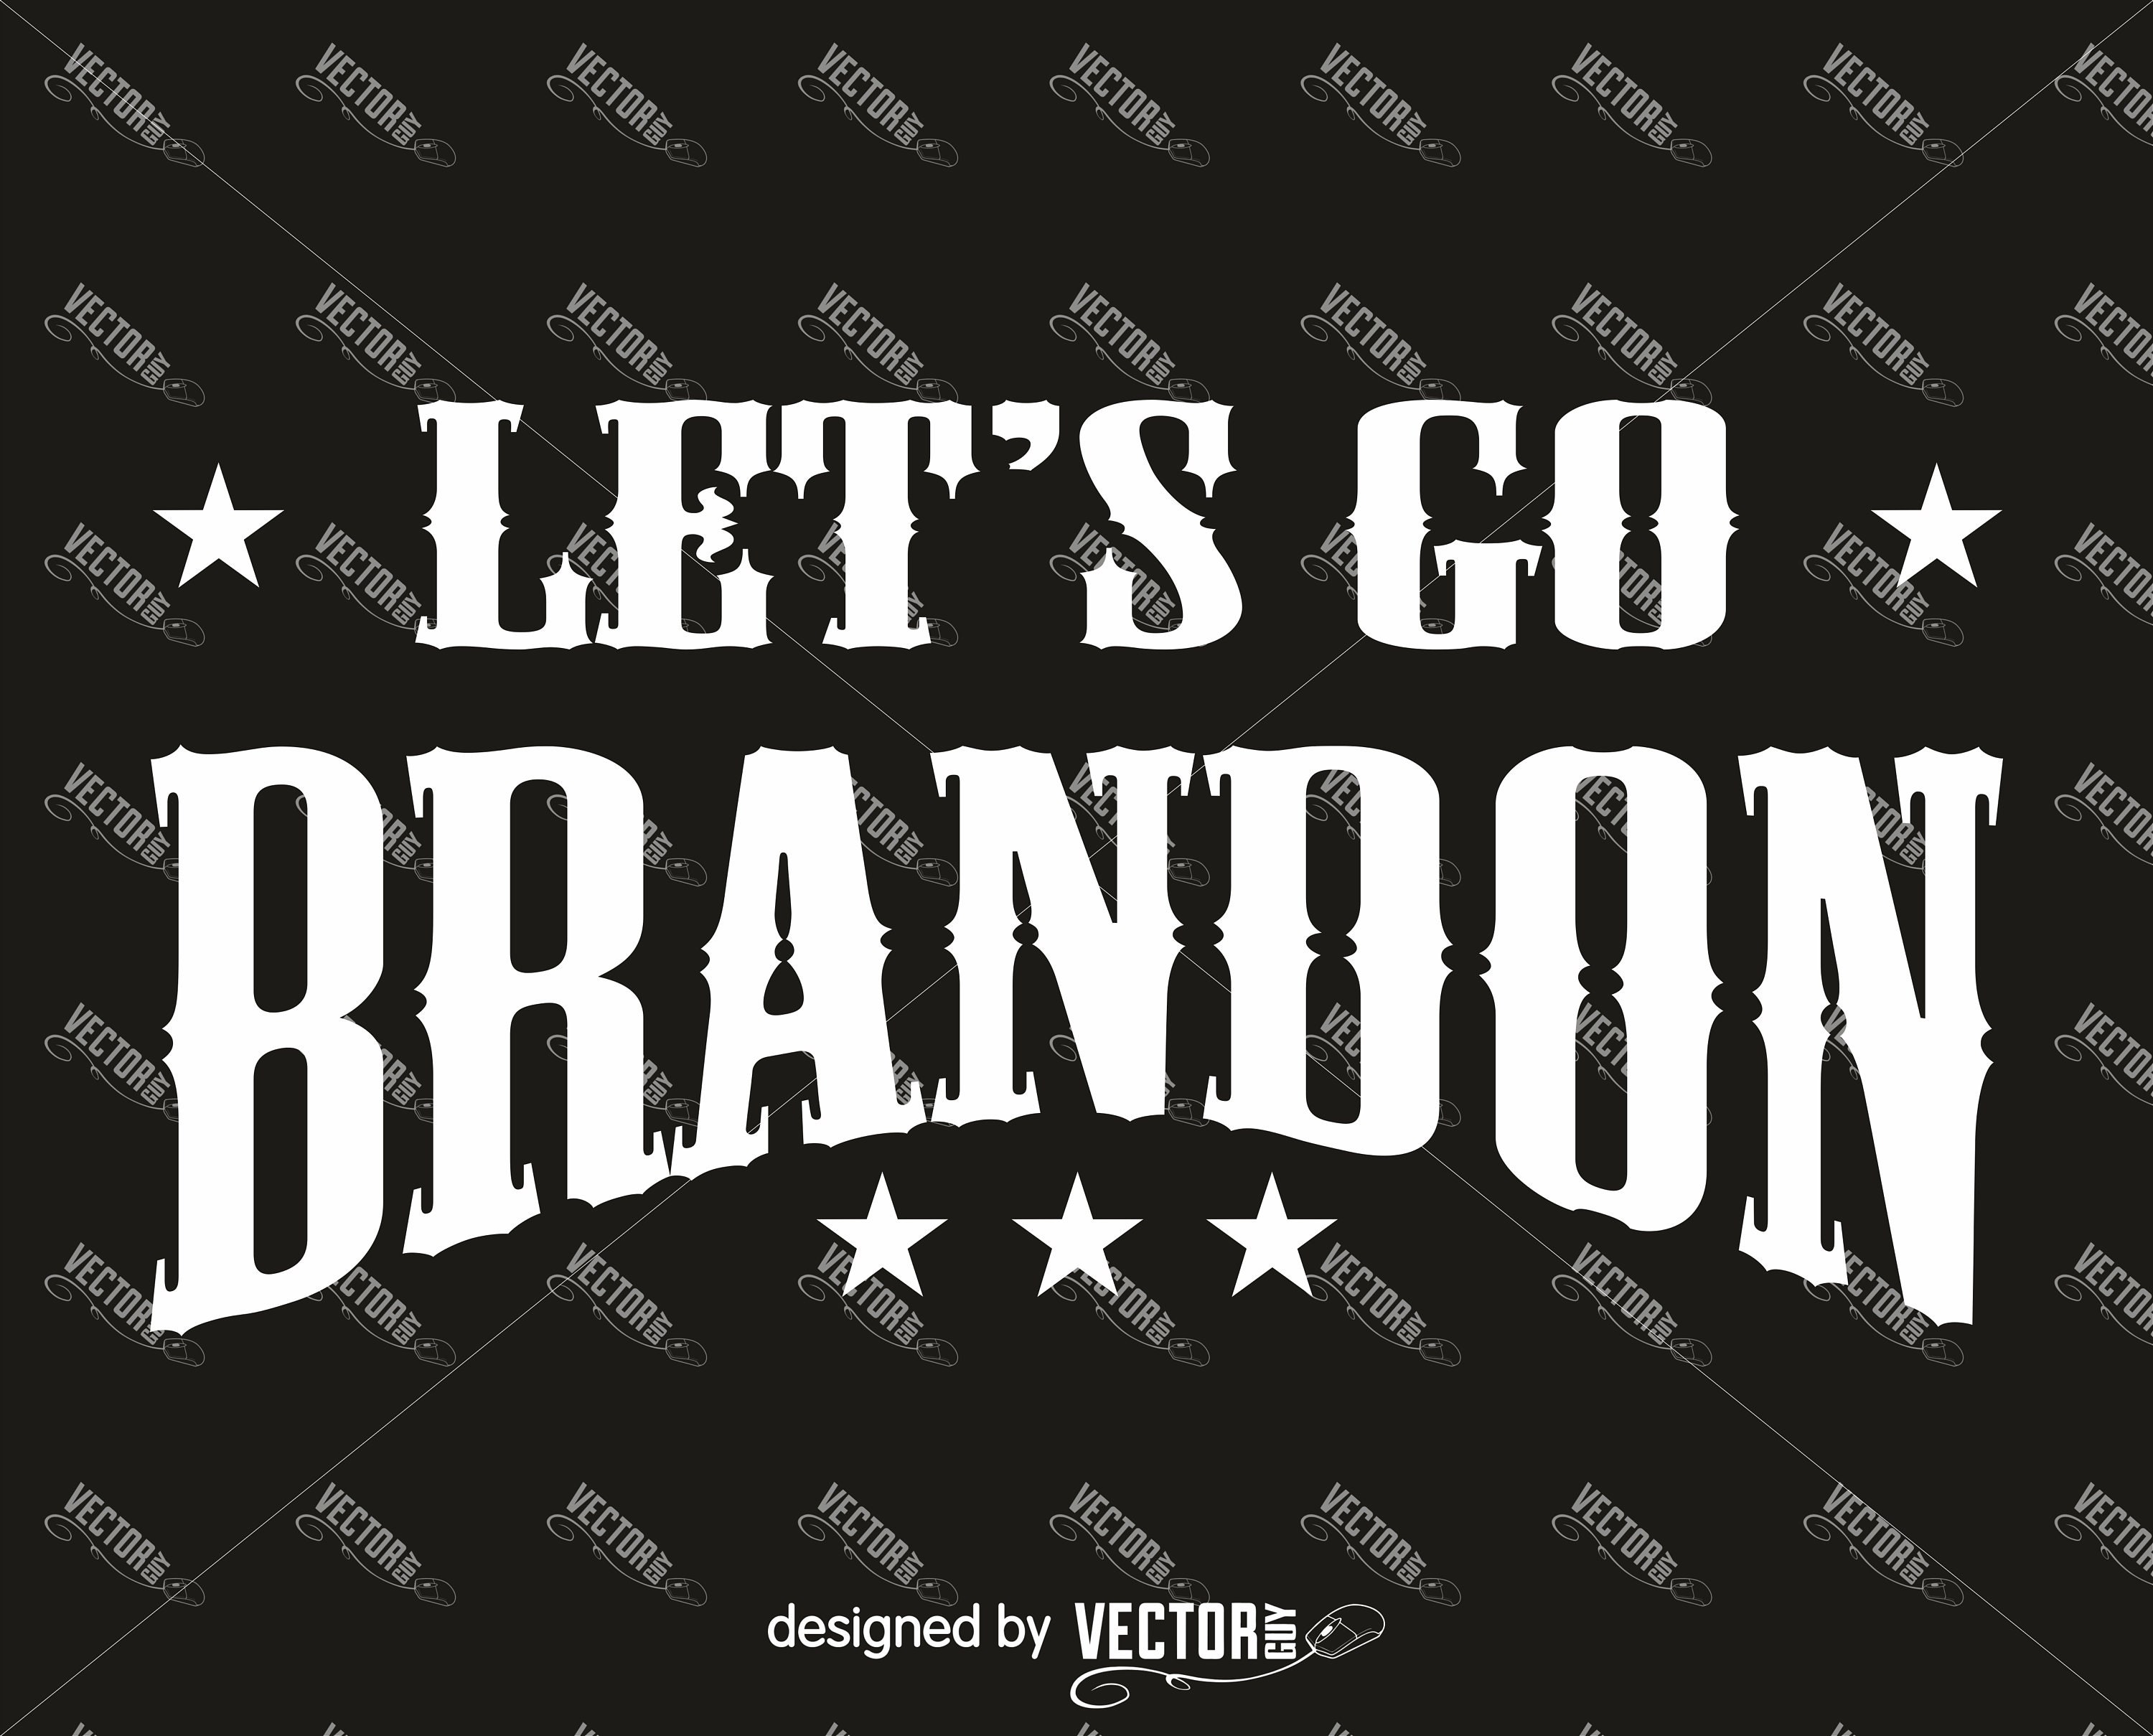 Let's Go Brandon, SVG Cut File, Instant Download -  Canada